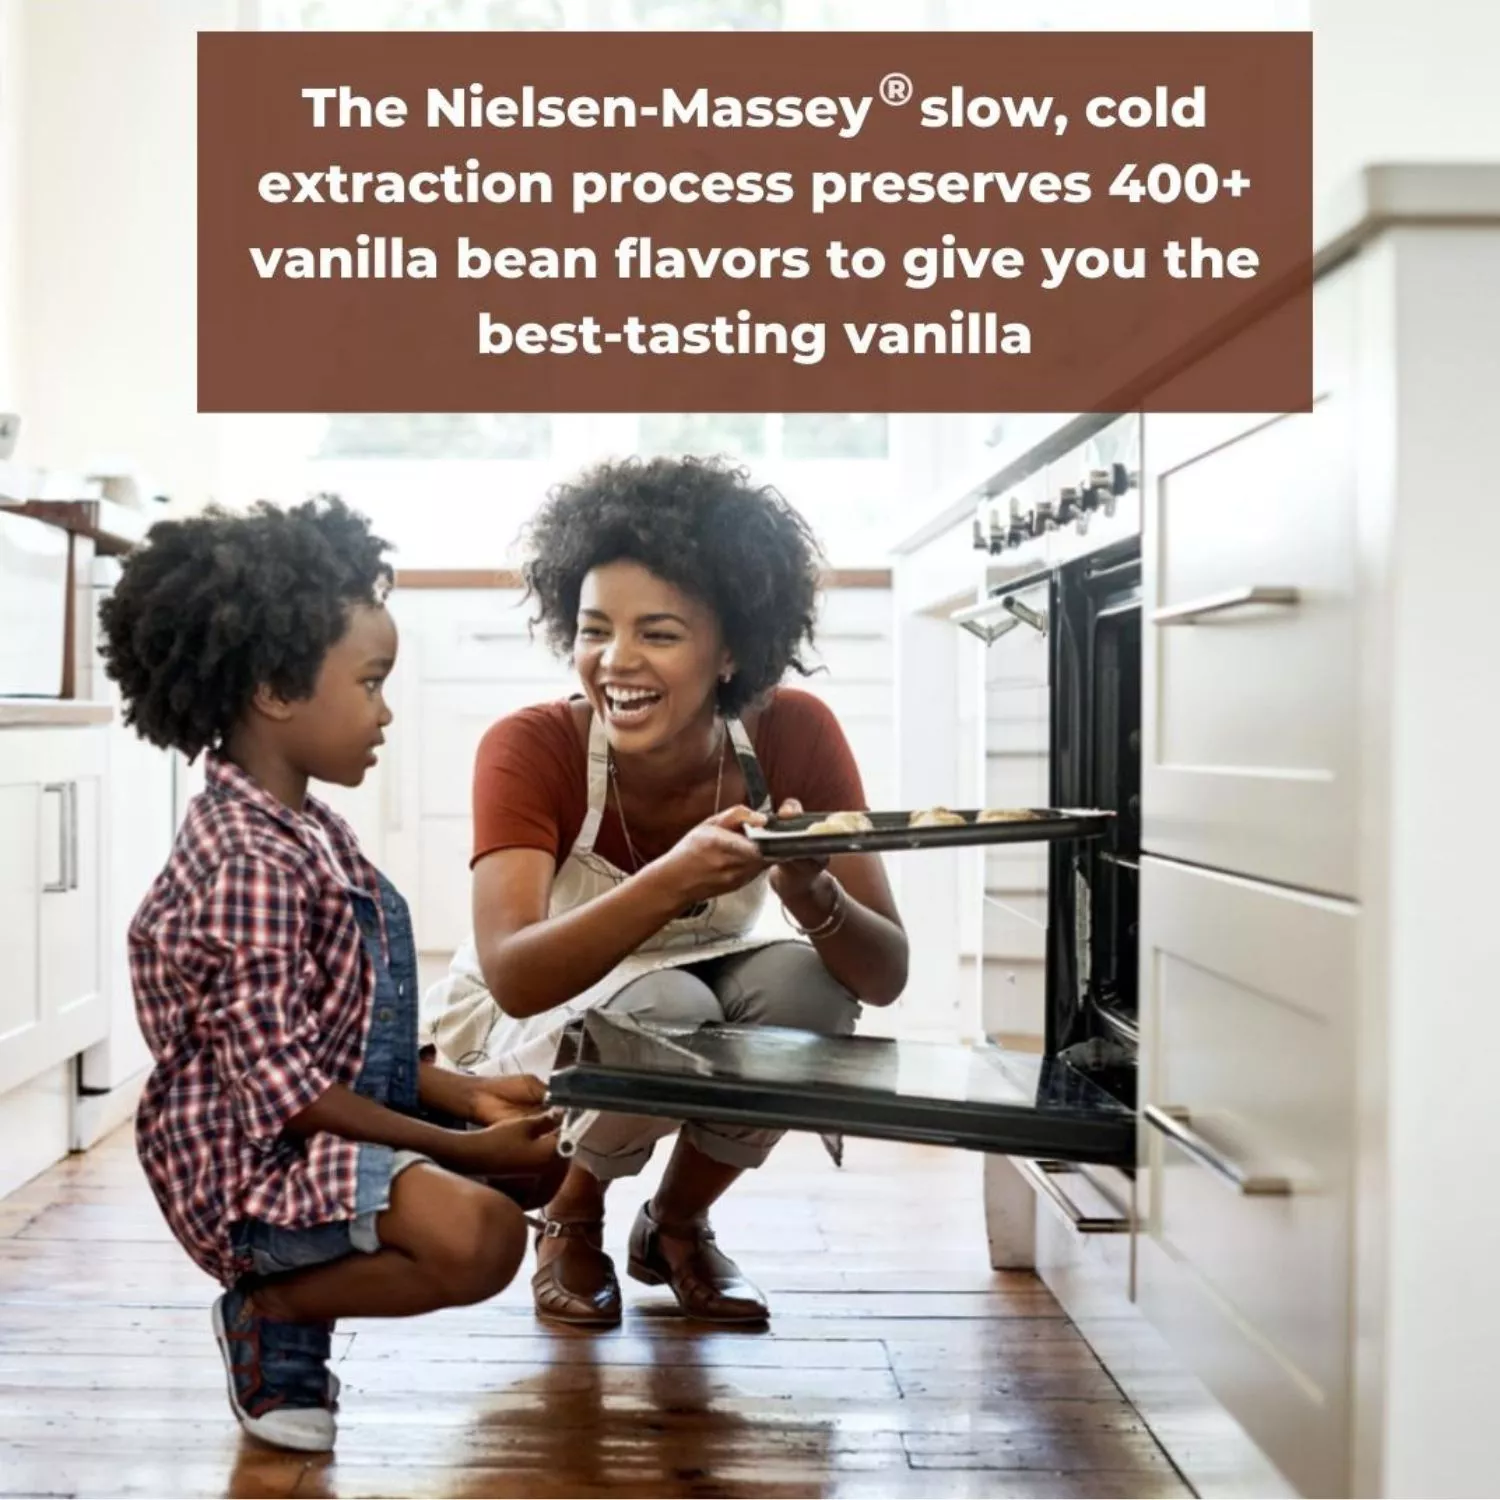 Nielsen-Massey Ugandan Pure Vanilla Extract